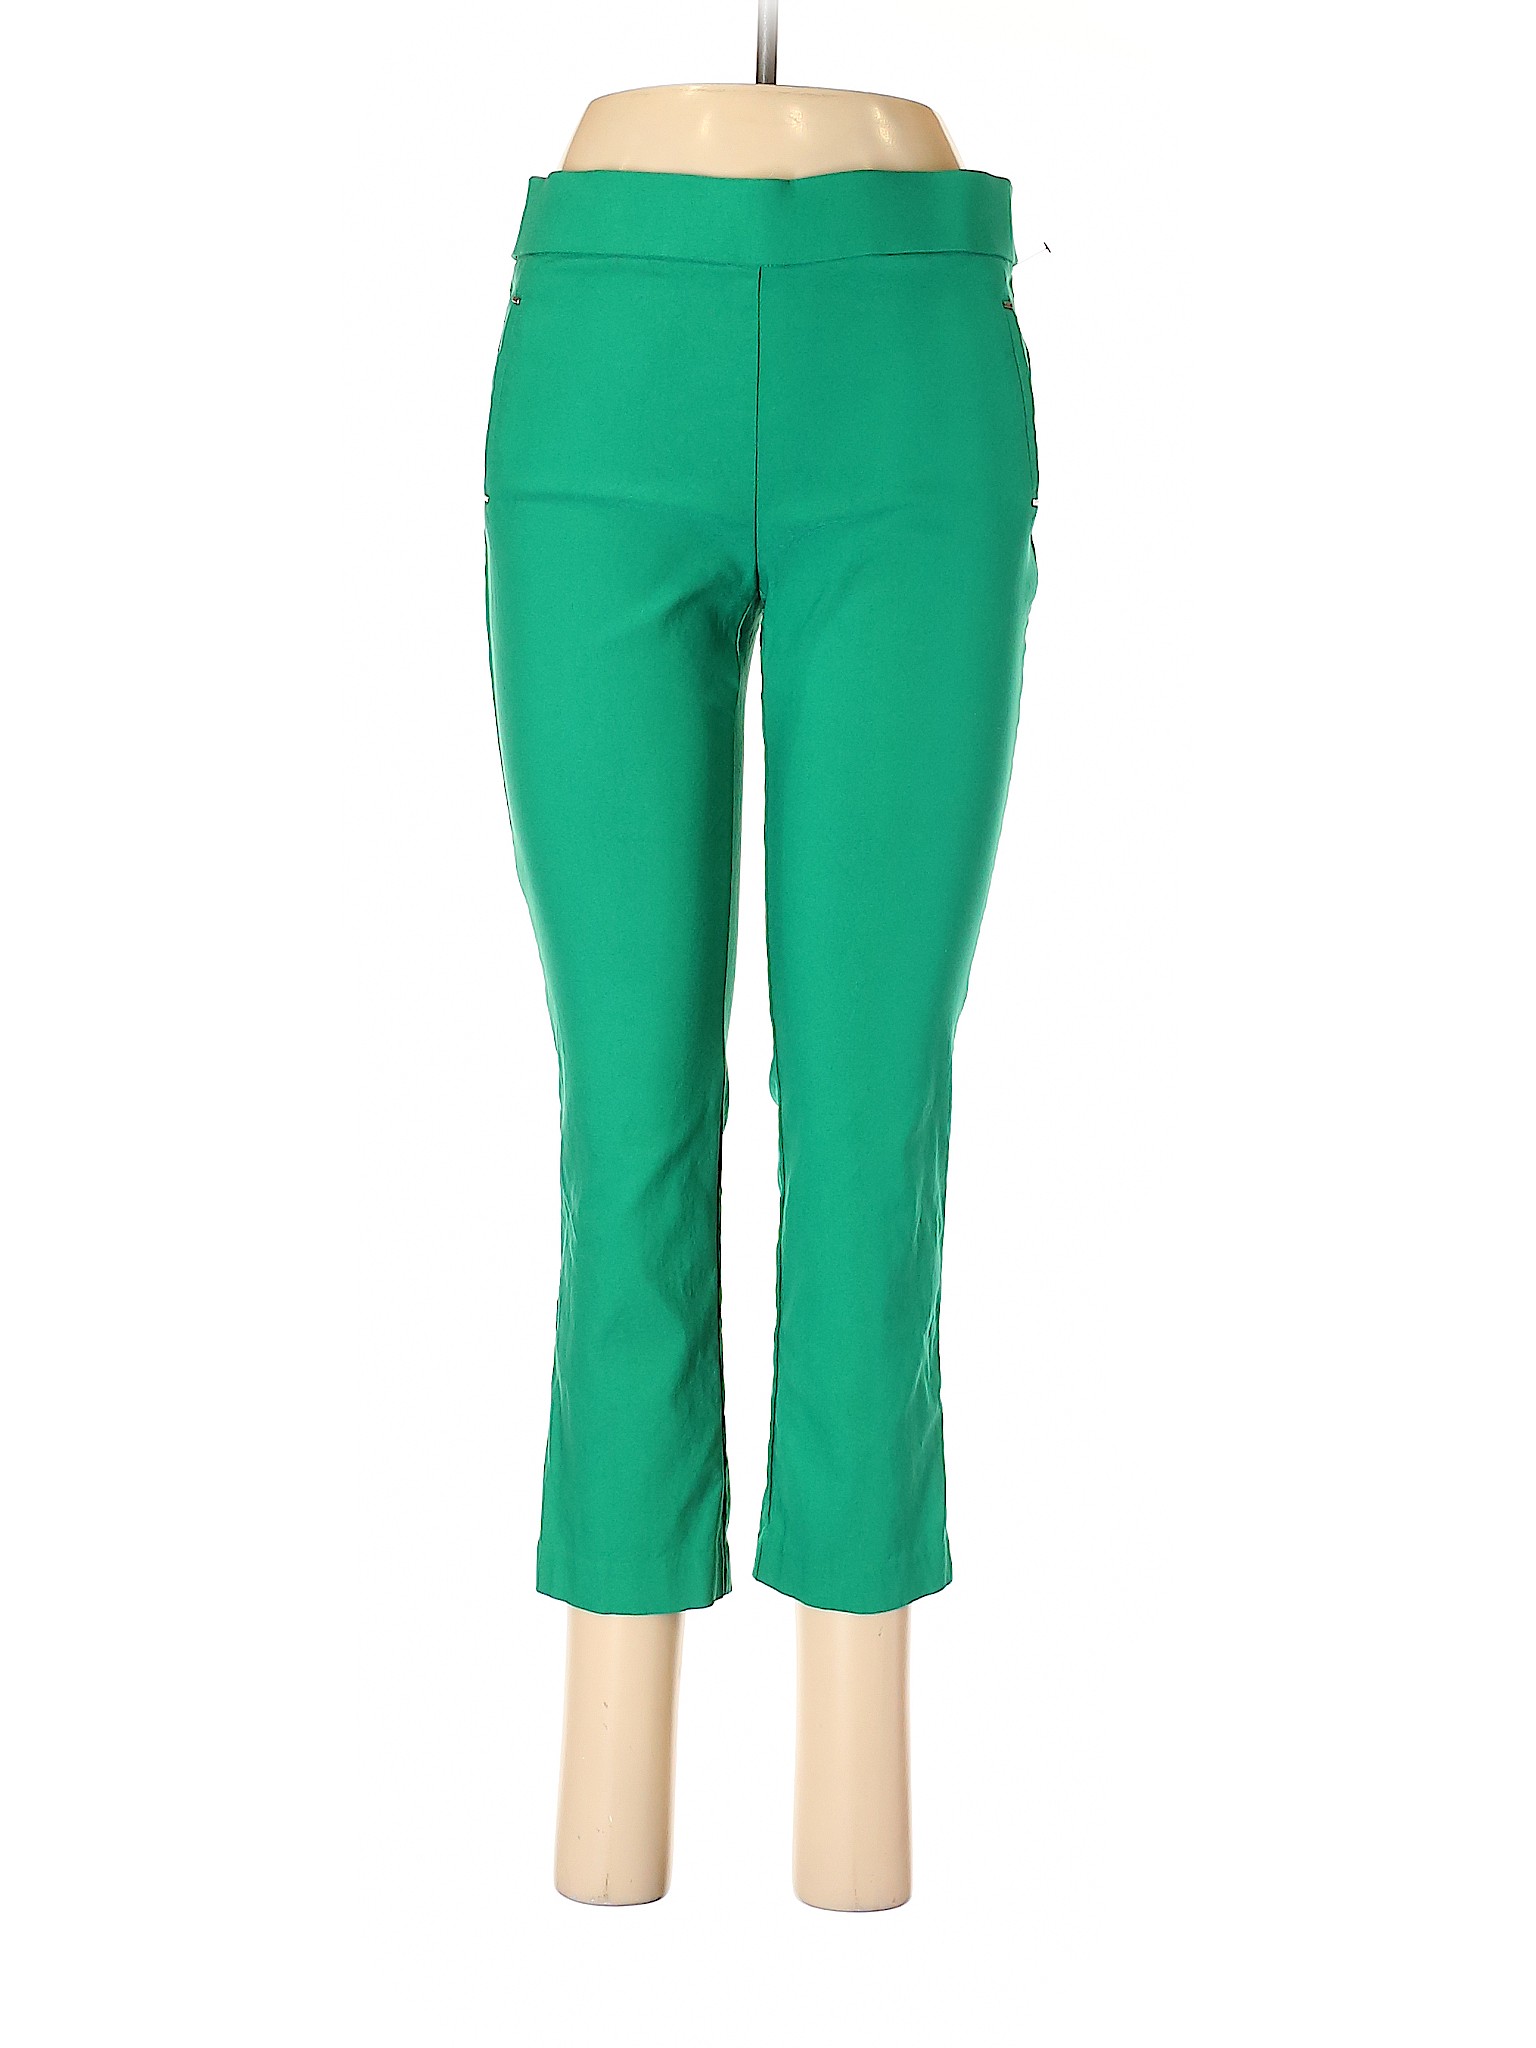 Jules & Leopold Solid Green Dress Pants Size M - 80% off | thredUP